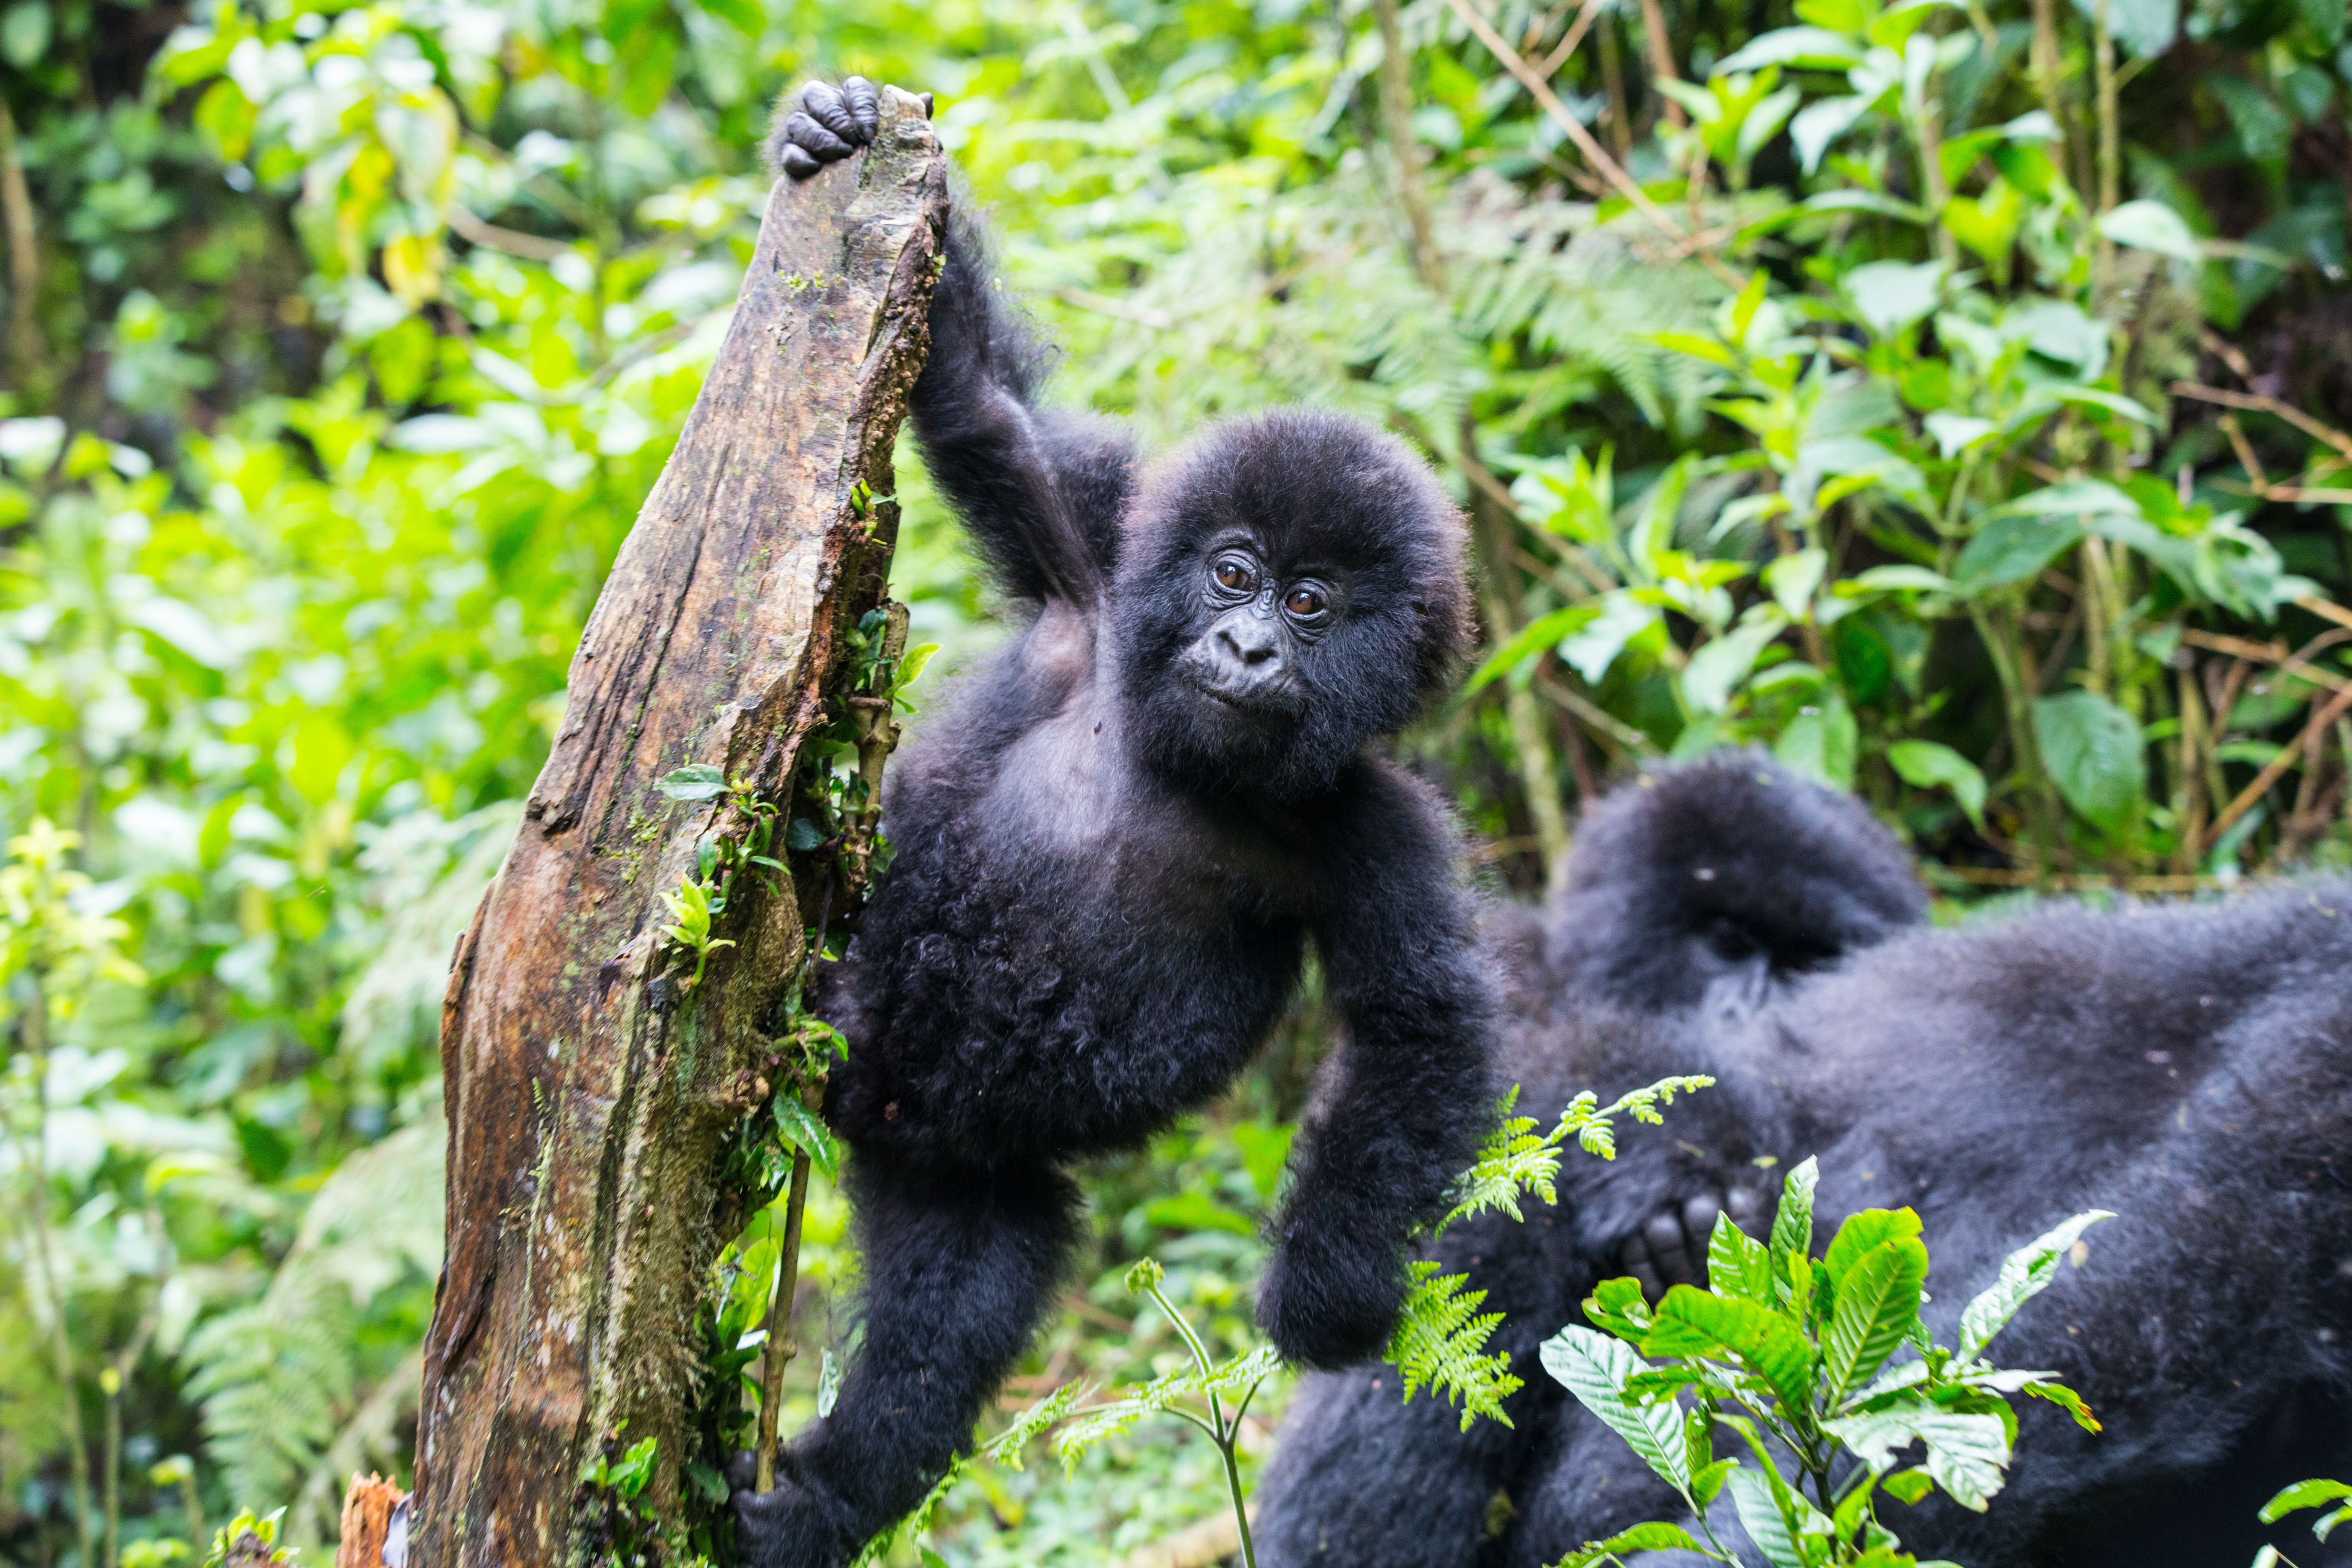 Trek the Gorilla Adventure in Uganda